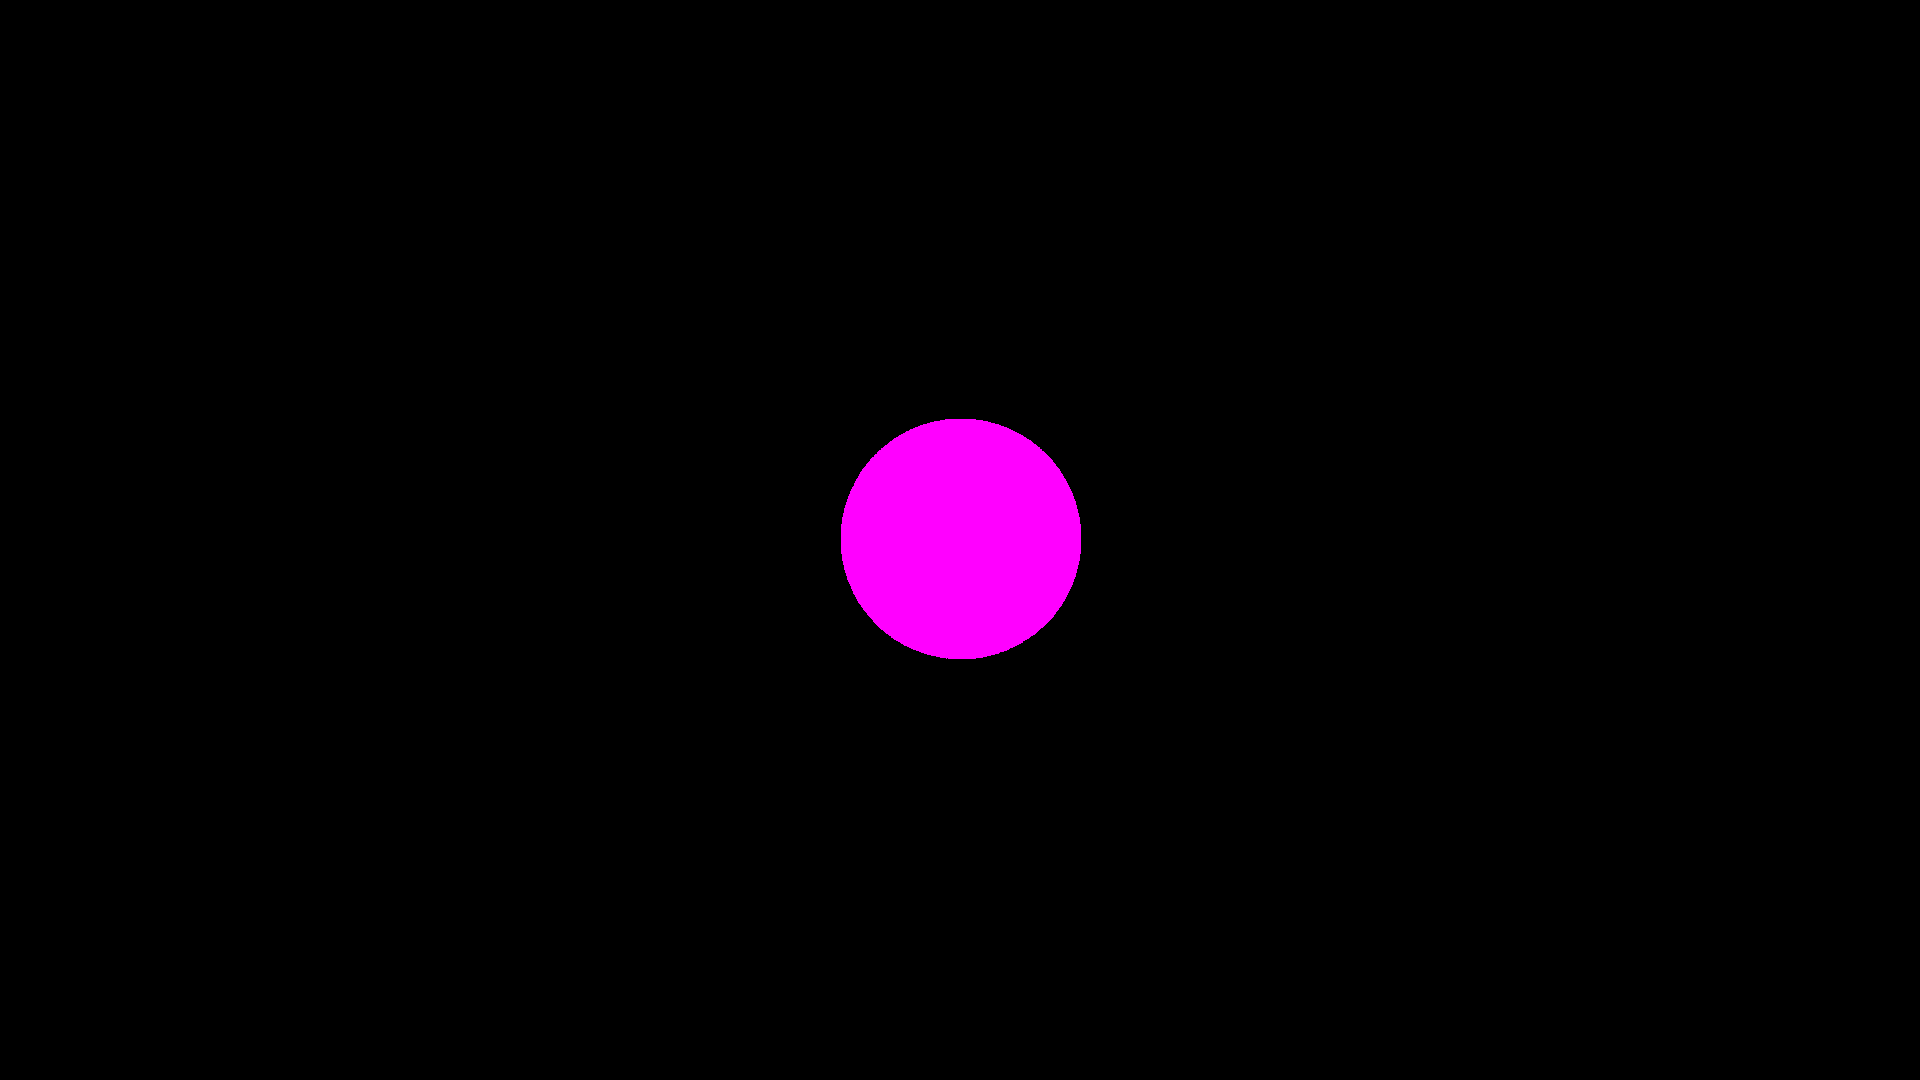 A simple circle